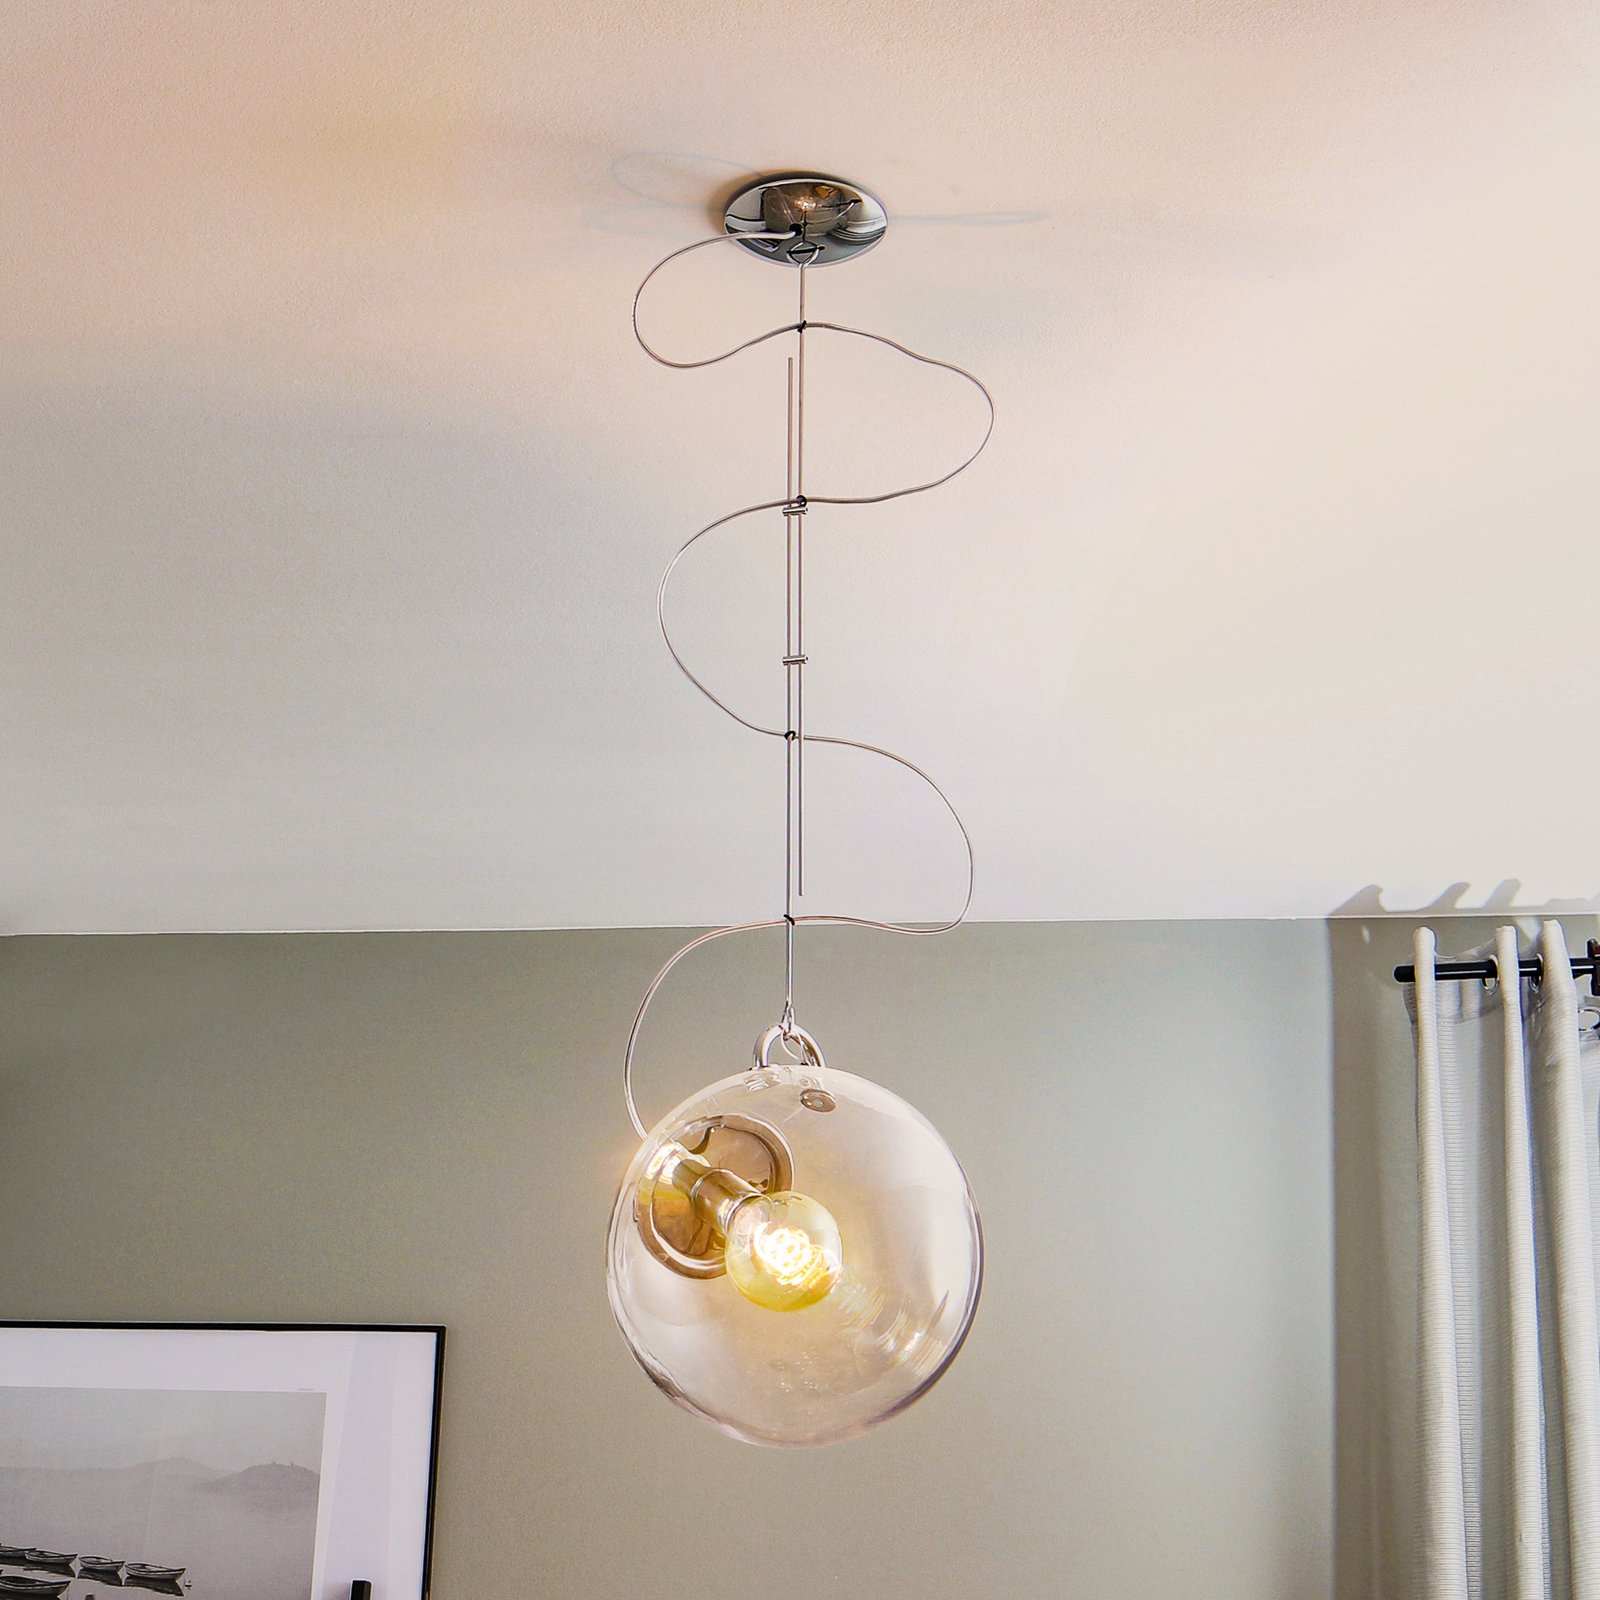 Artemide Miconos glazen hanglamp in chroom